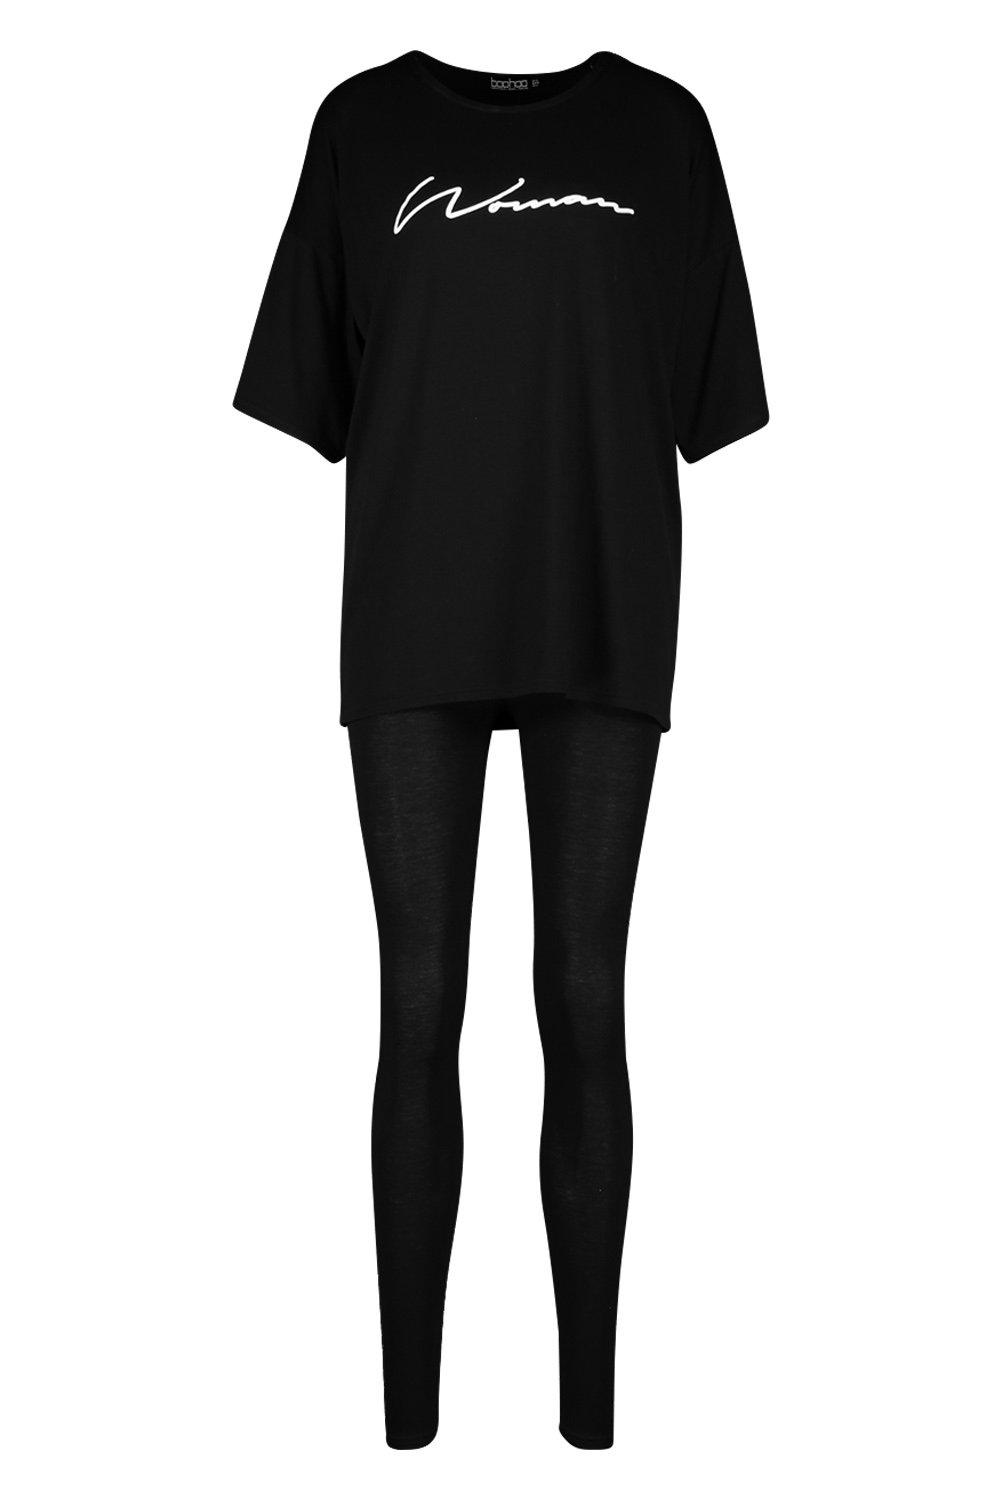 https://media.boohoo.com/i/boohoo/fzz76621_black_xl_2/female-black-woman-oversized-t-shirt-&-legging-set